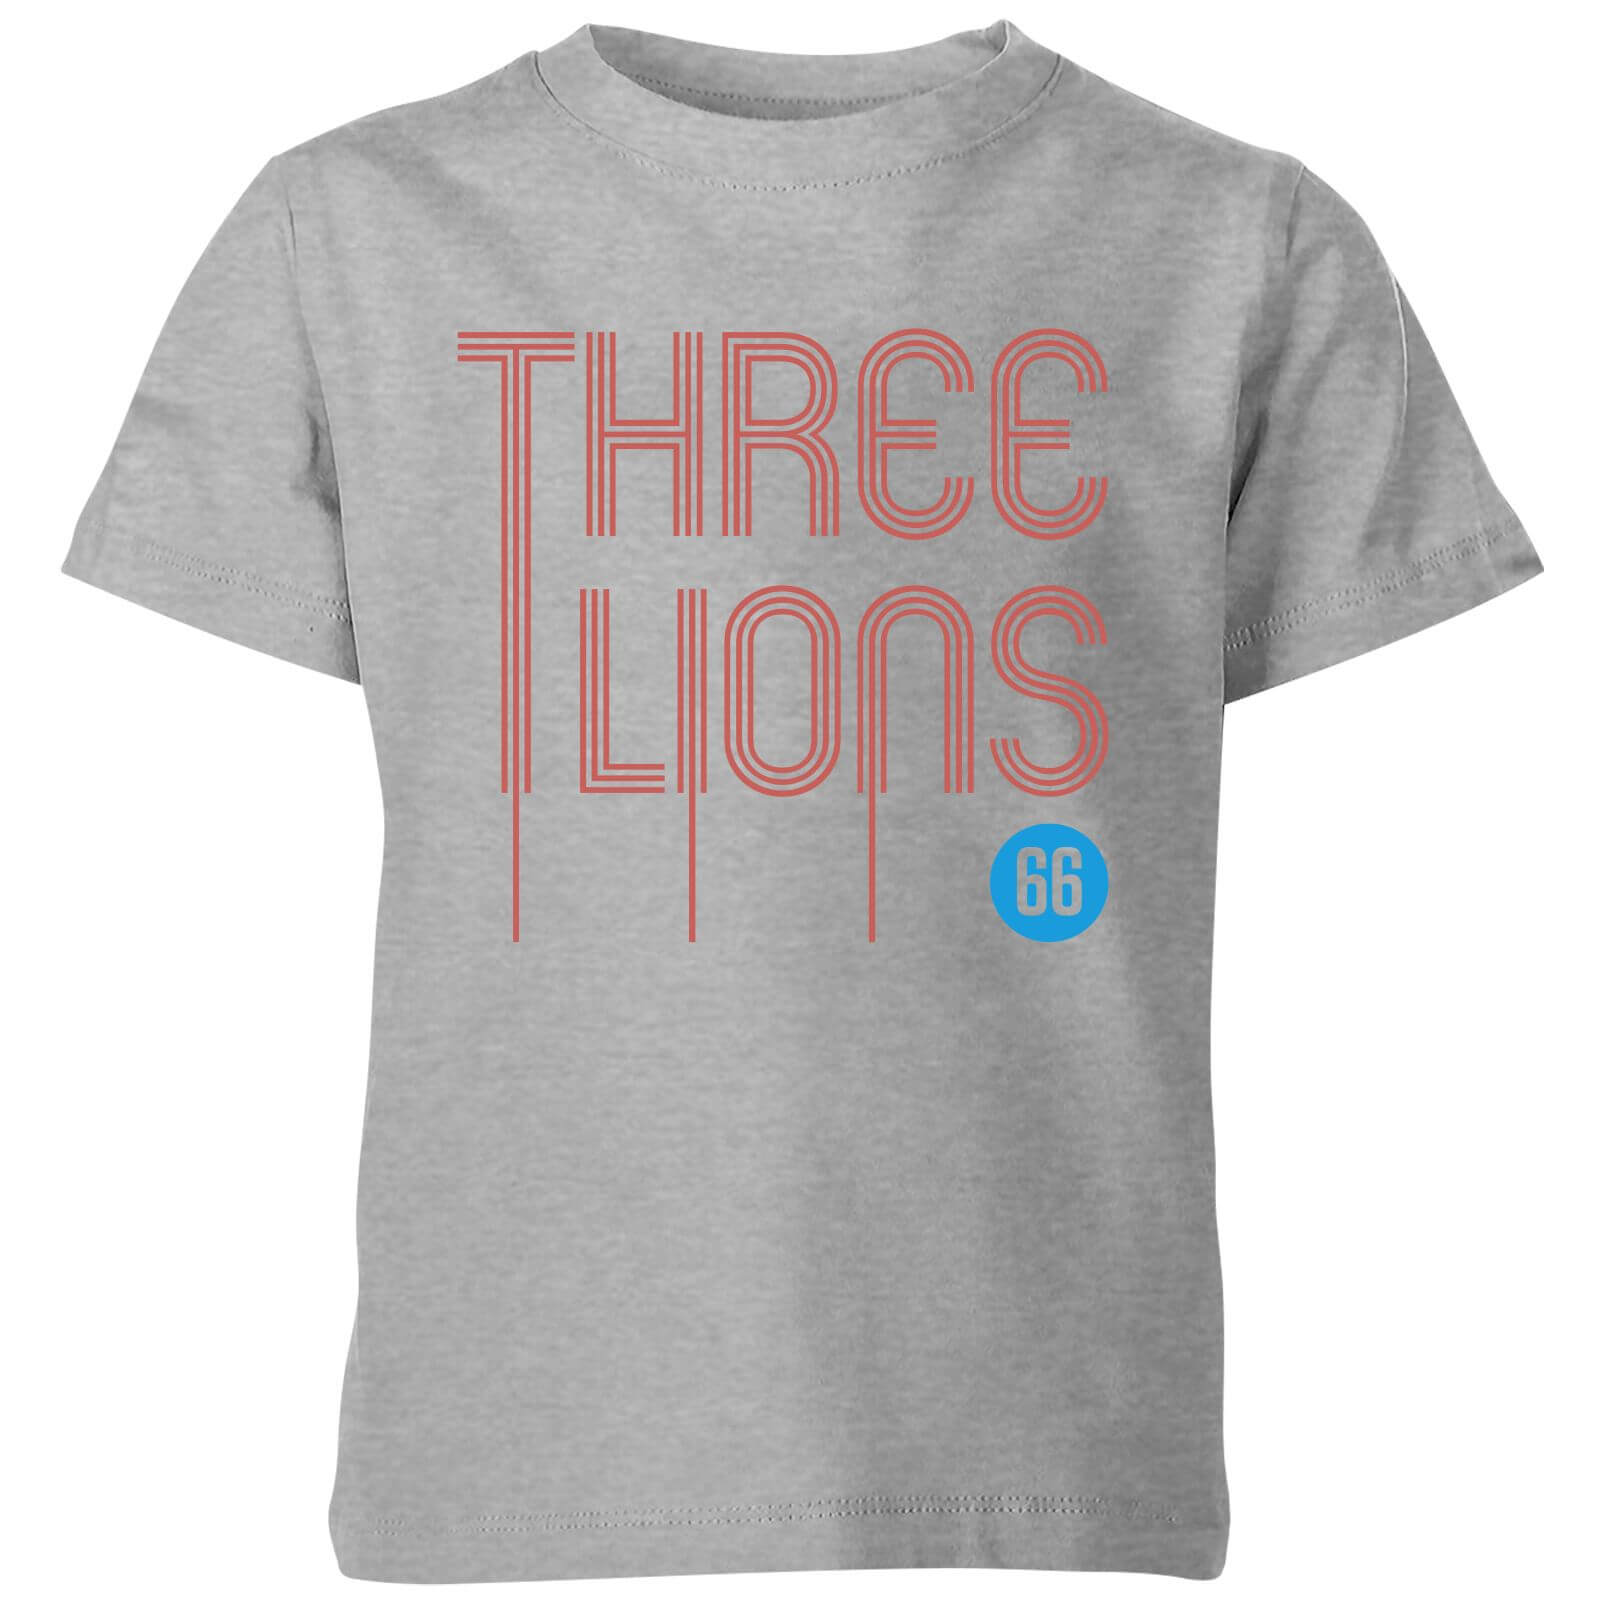 Three Lions Kids' T-Shirt - Grey - 3-4 Years - Grey